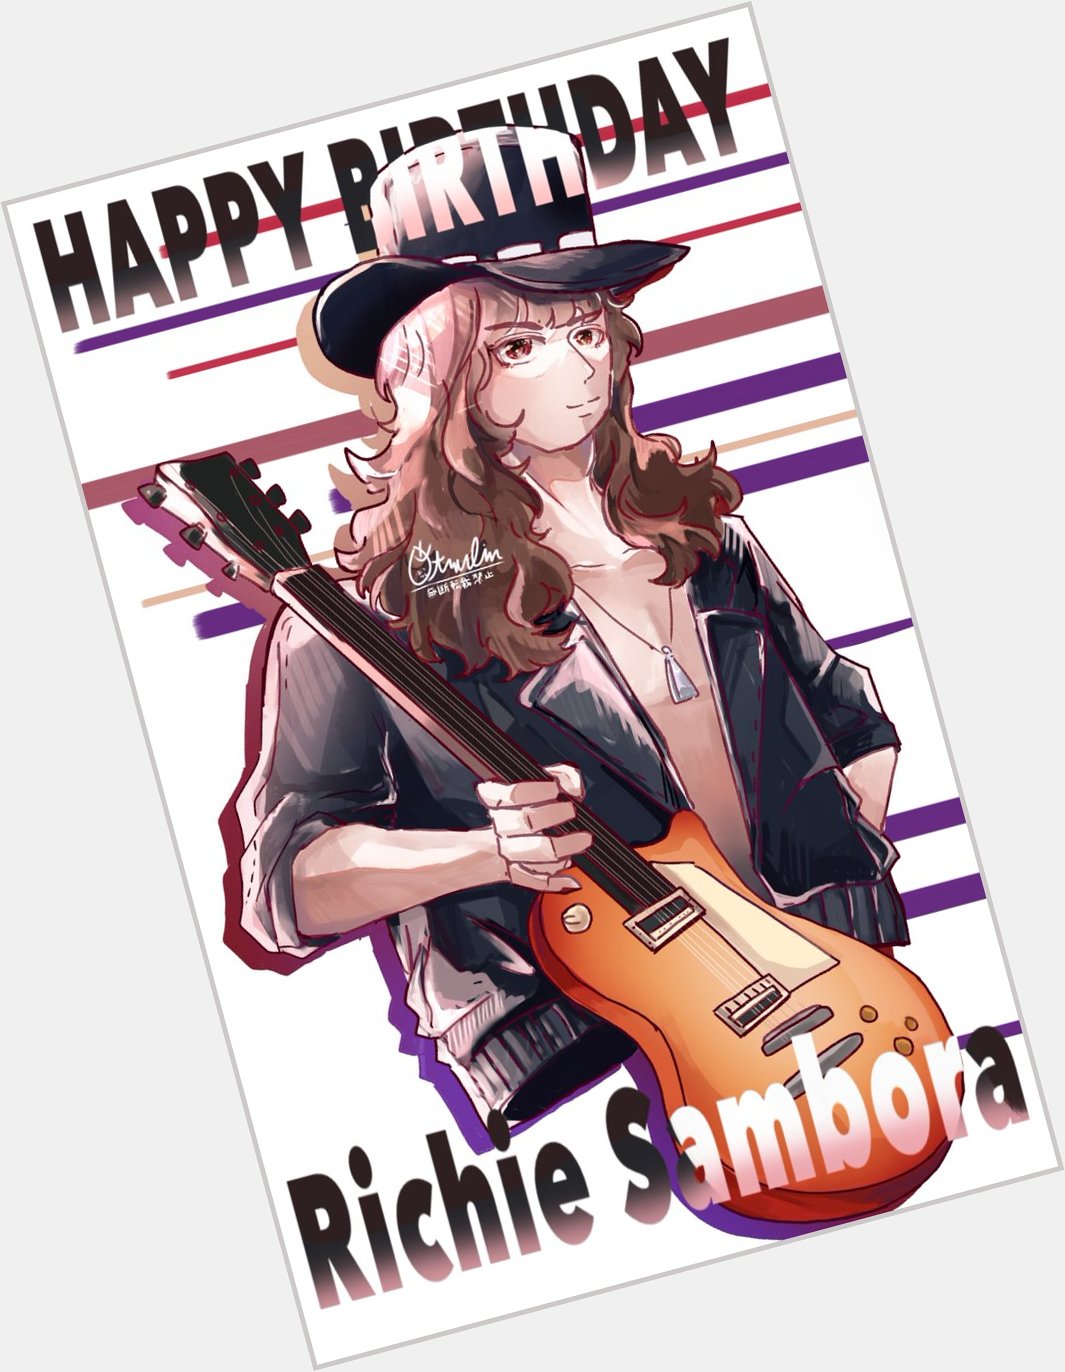 Happy birthday Richie Sambora!!     